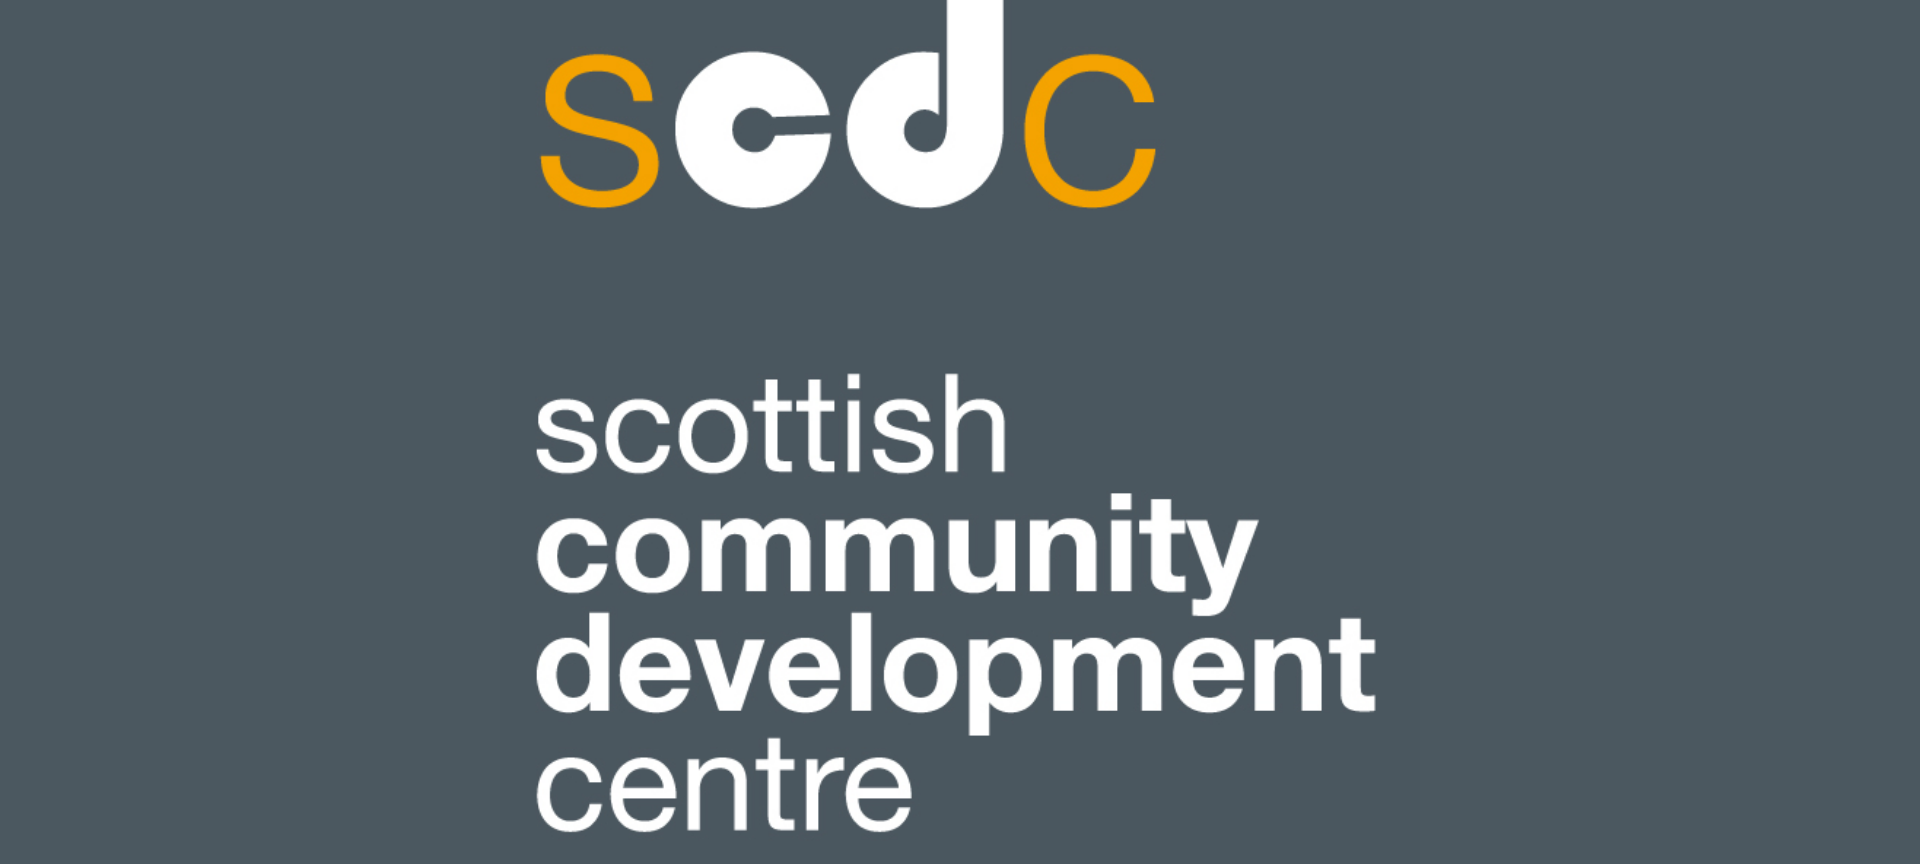 scdc logo